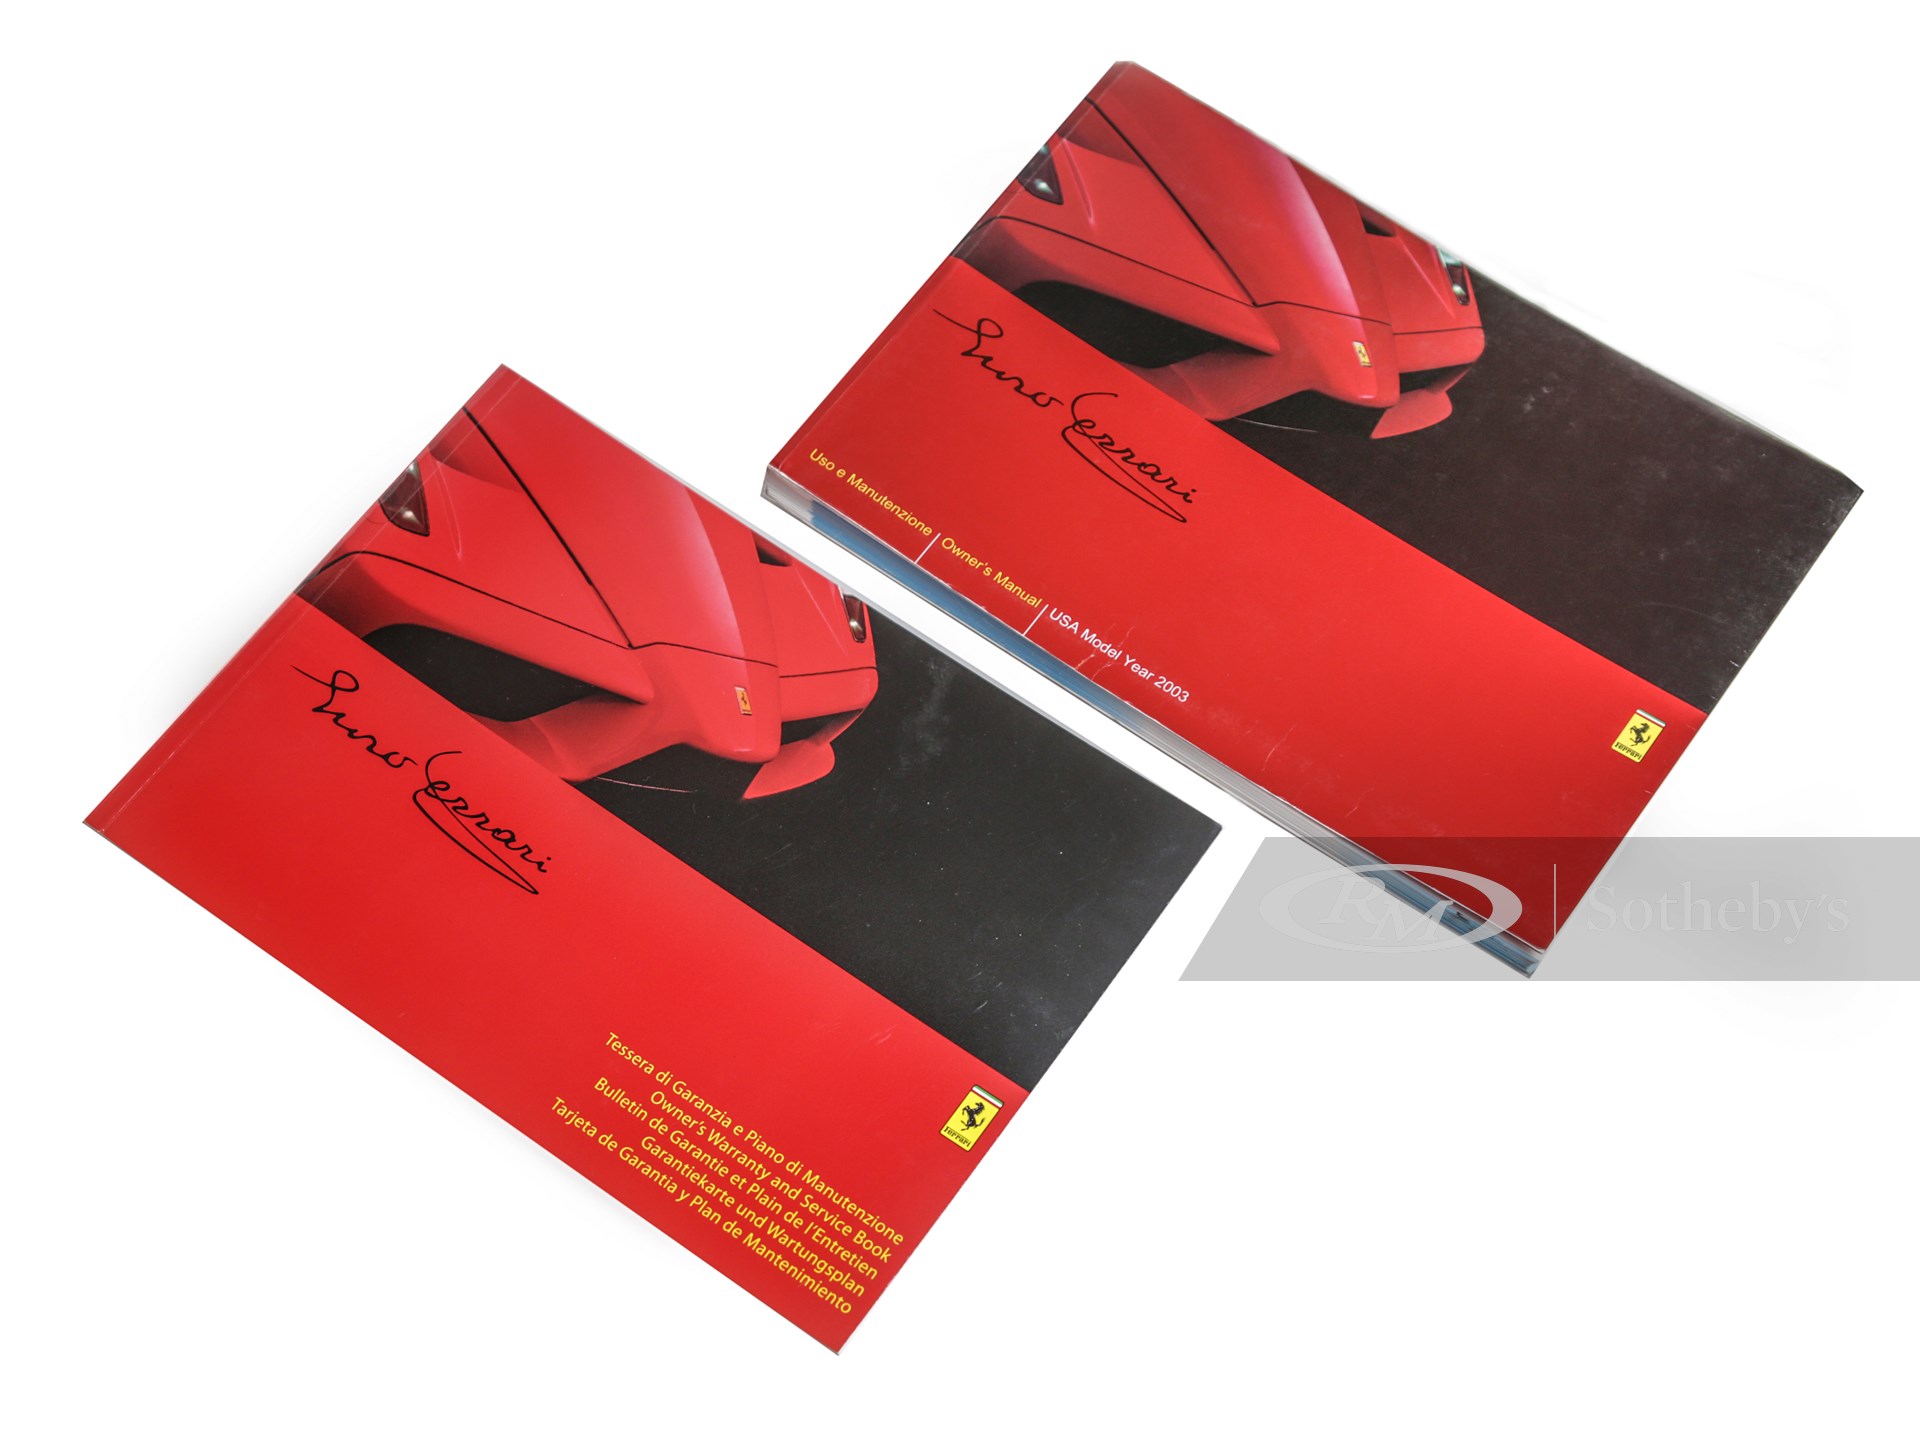 Ferrari Enzo Owner's Manual, Warranty and Service Book, and Folio